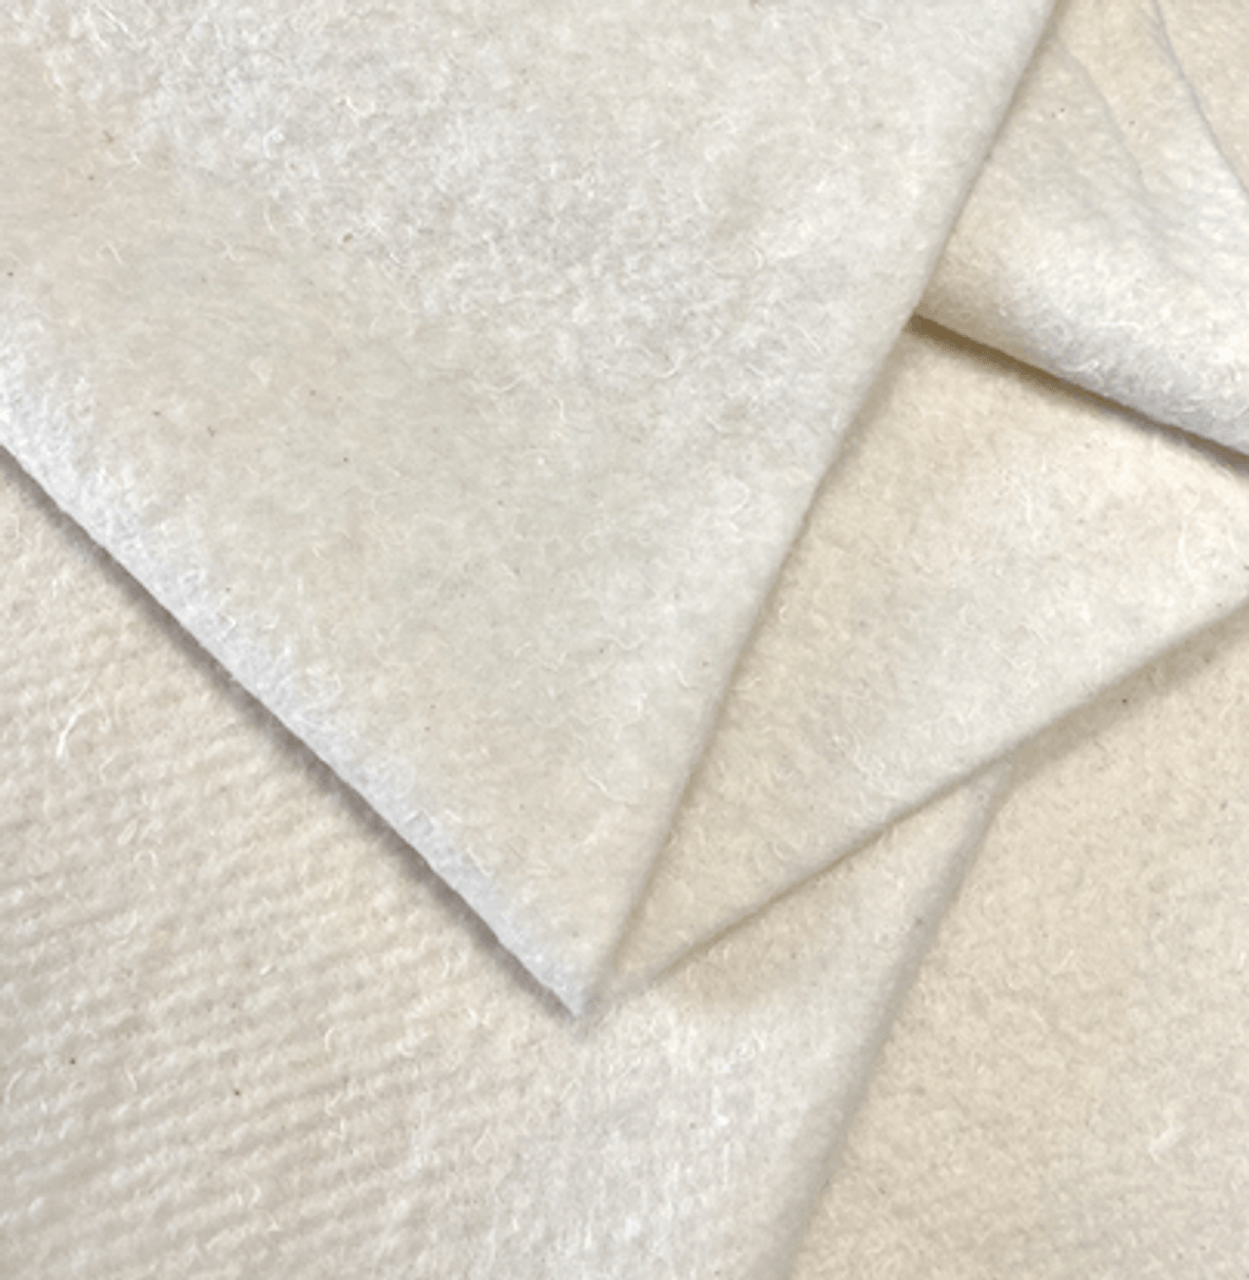 Sew Simple Super Soft Eco Blend 70/30 cotton blend wadding